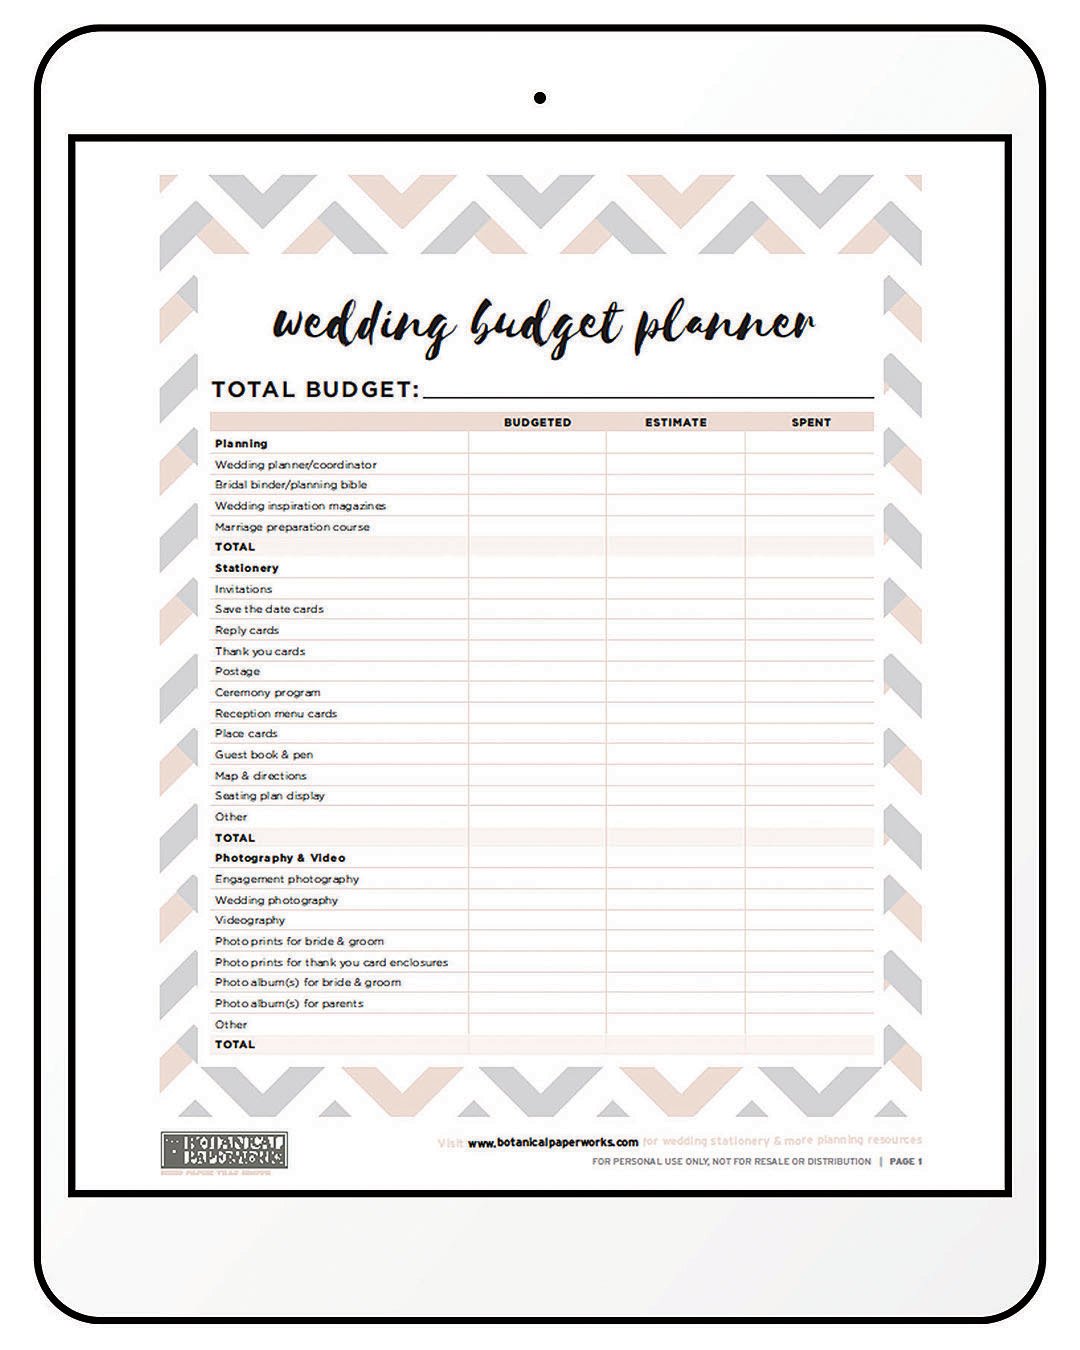 One Page Planner & Download Digital Wedding Planner Checklist Overview Wedding Digital Planner downloadable Planner Printable PDF